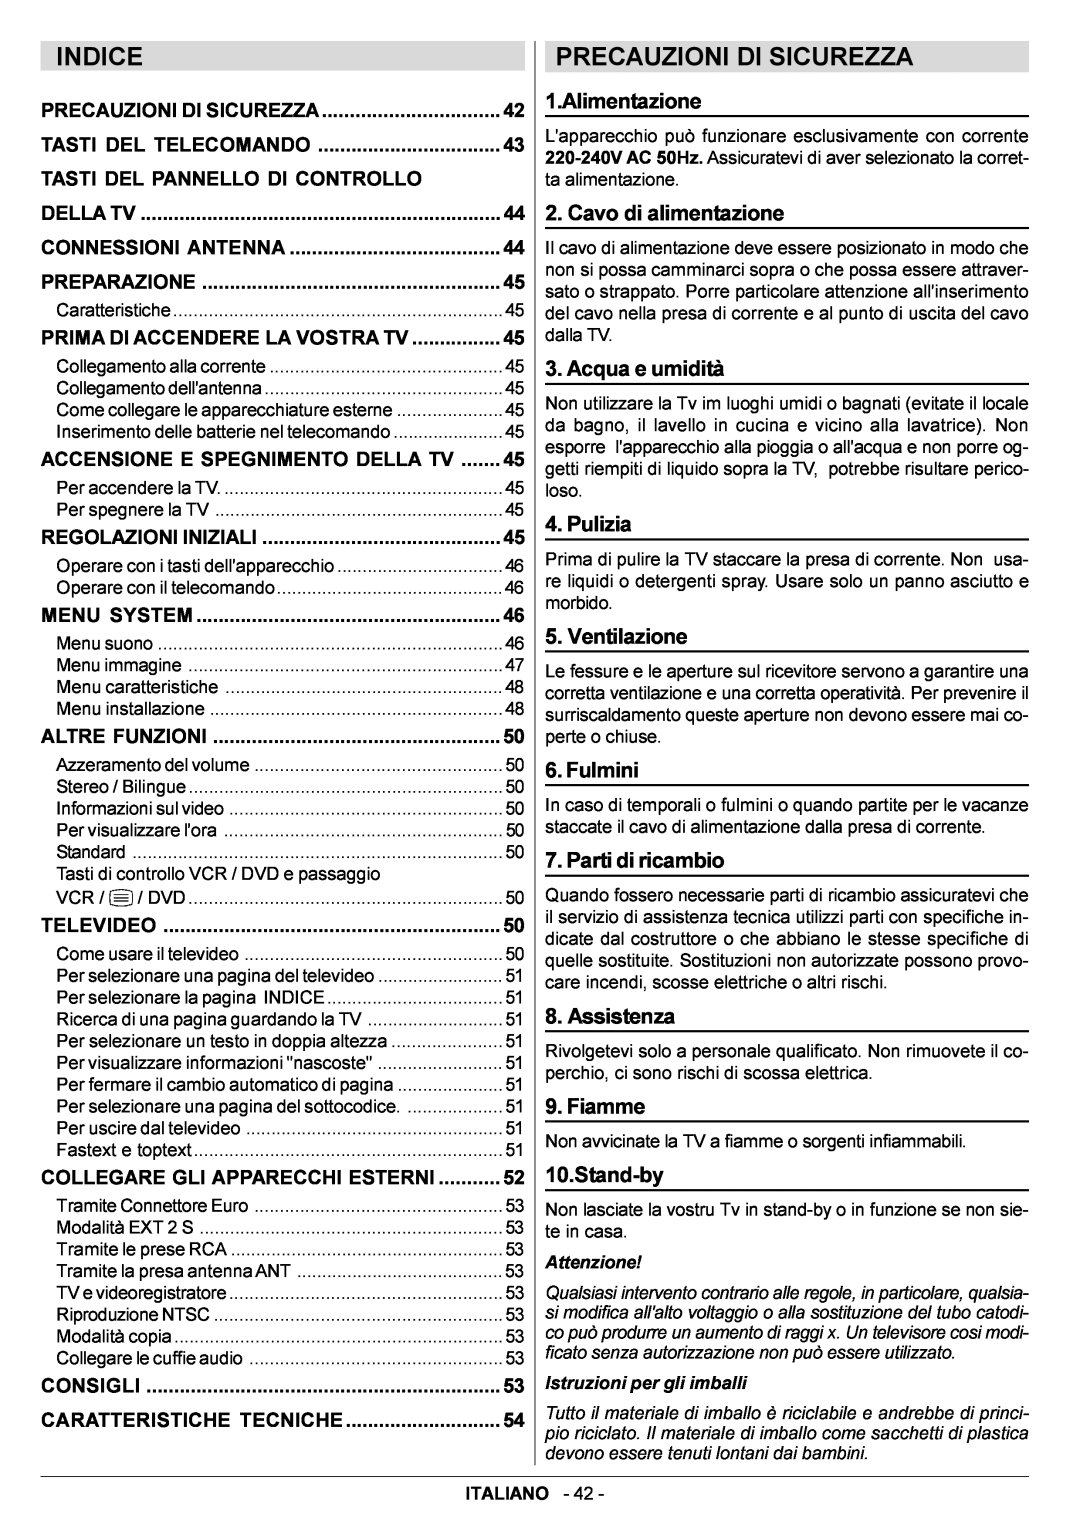 JVC AV29BF10EPS manual Indice, Precauzioni Di Sicurezza 